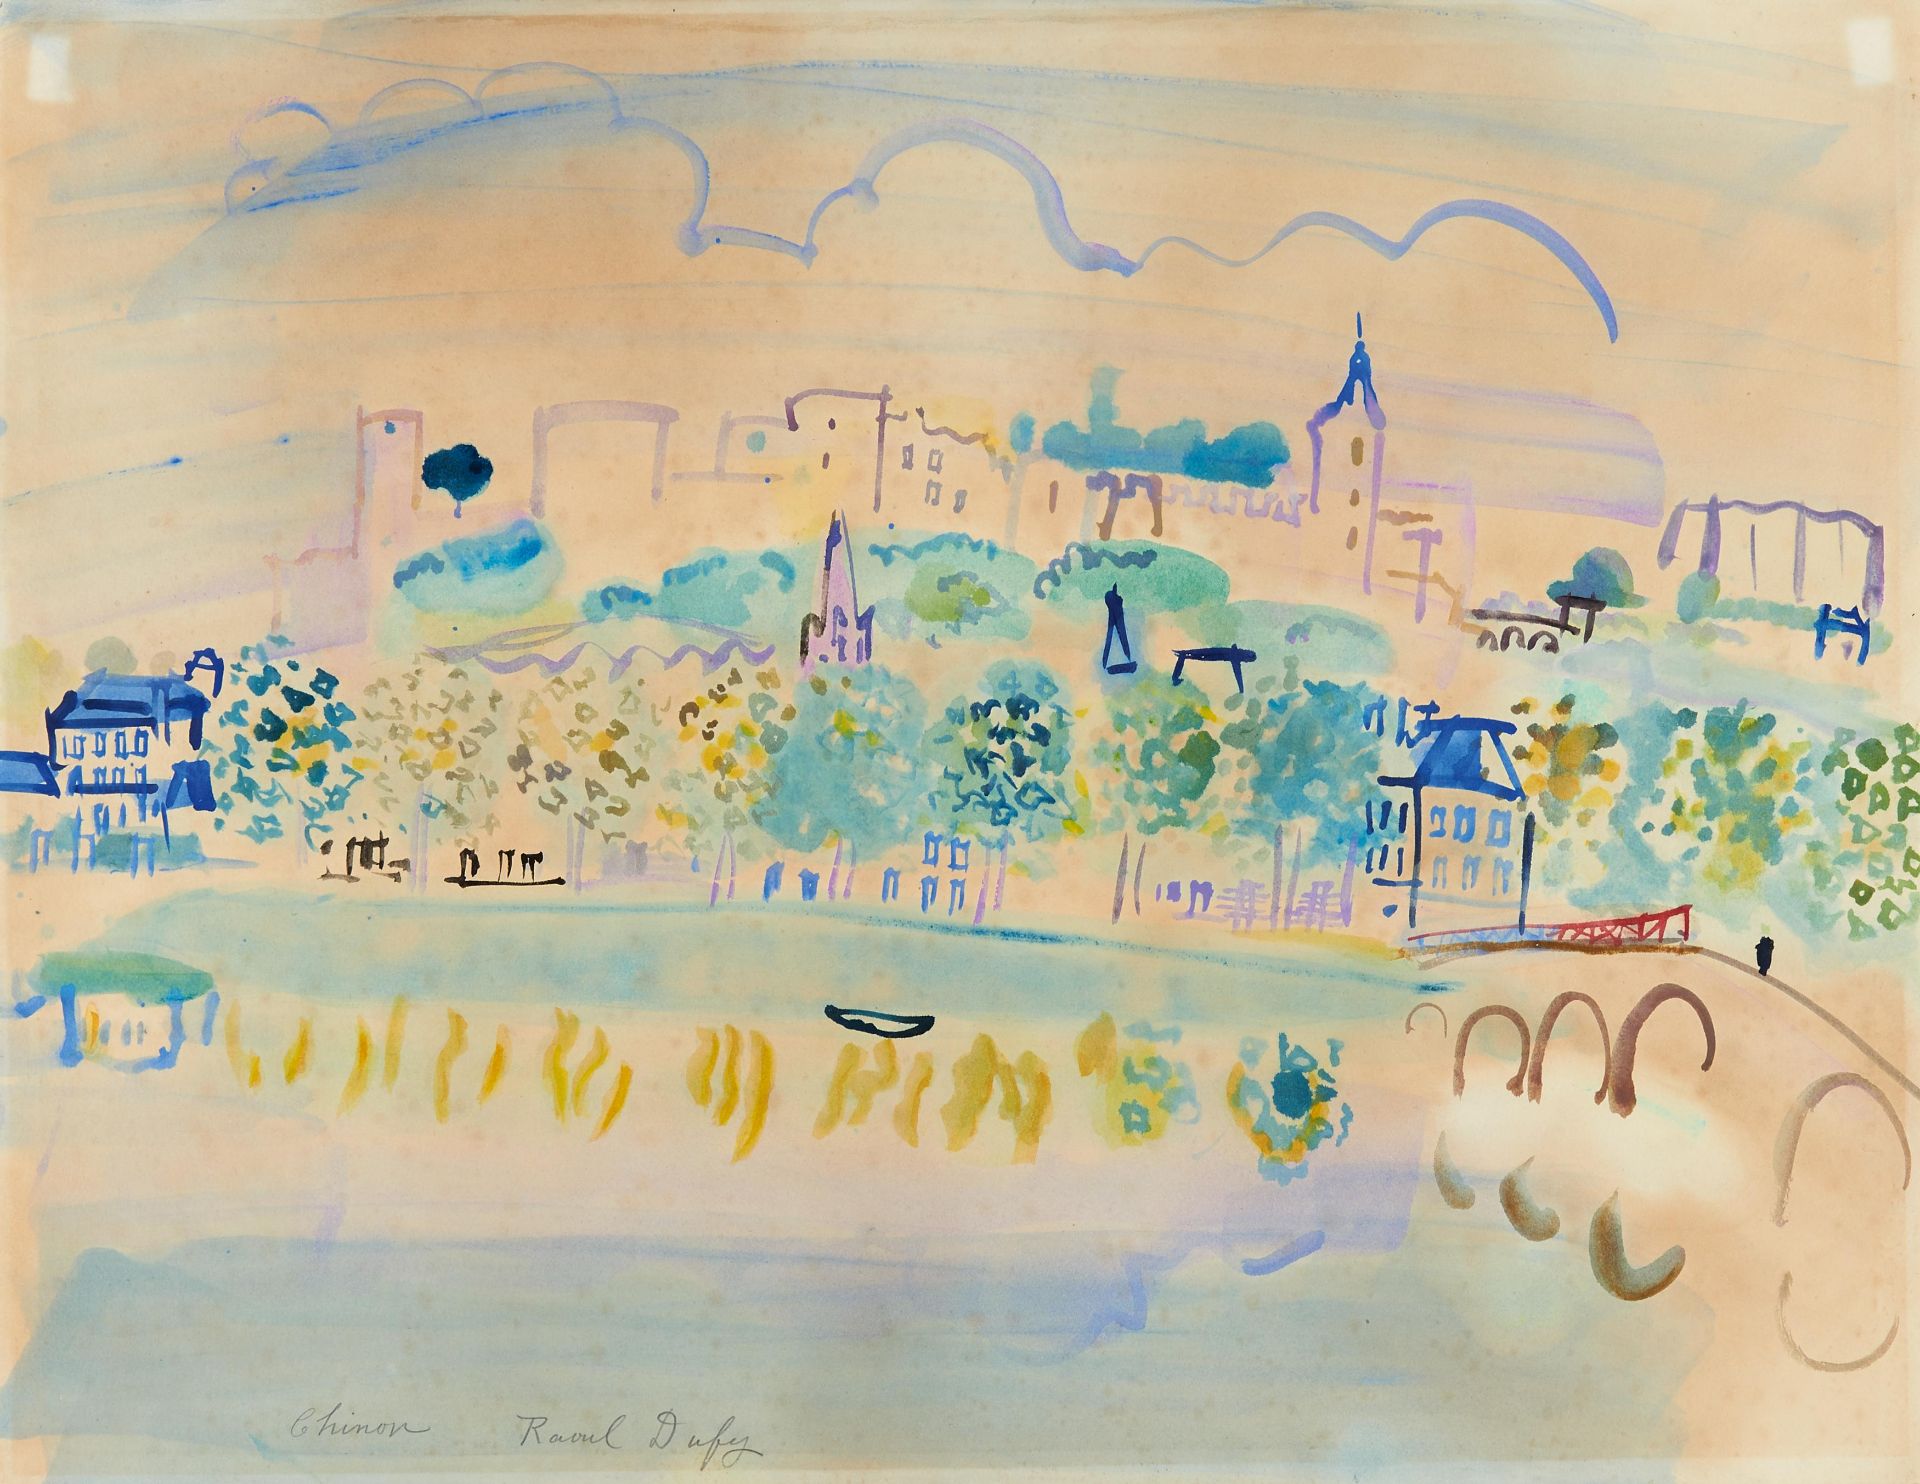 Dufy, Raoul 1877 Le Havre - 1953 Forcalquier Chinon. 1938. Aquarell auf Velin. 50 x 65cm. Signiert